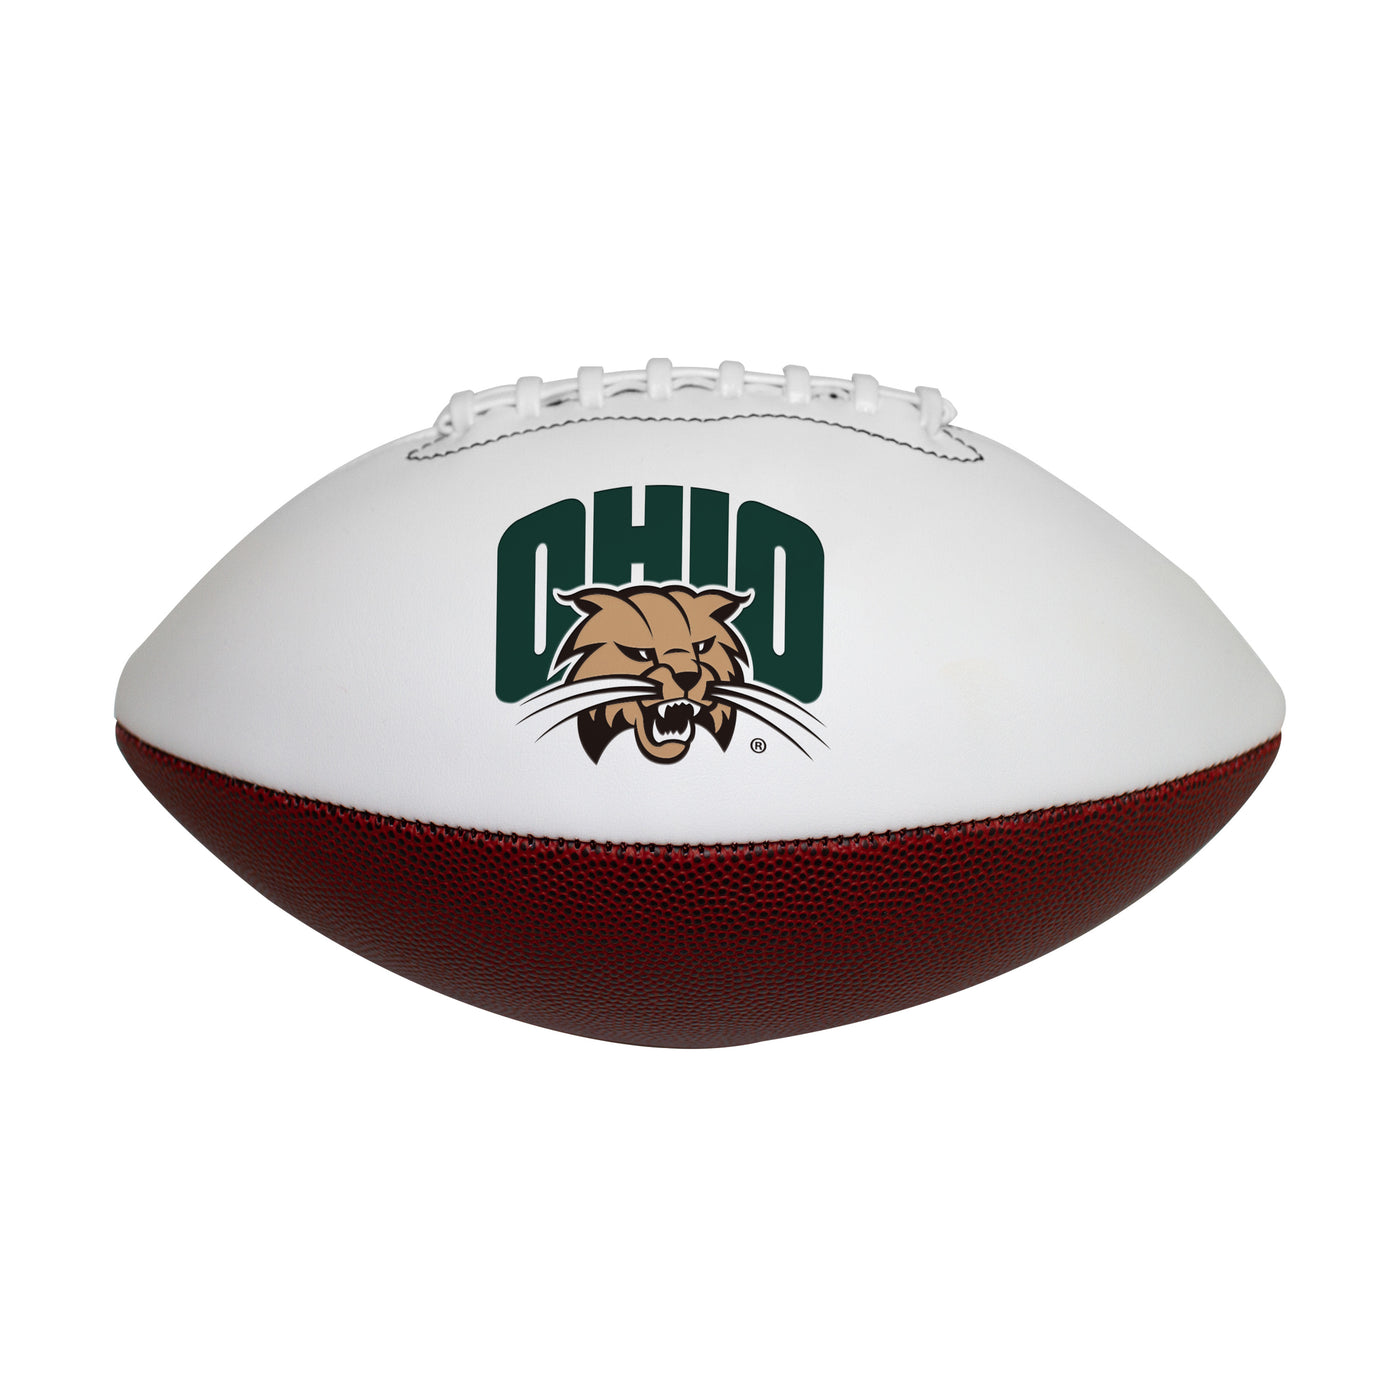 Ohio Univ Official-Size Autograph Football